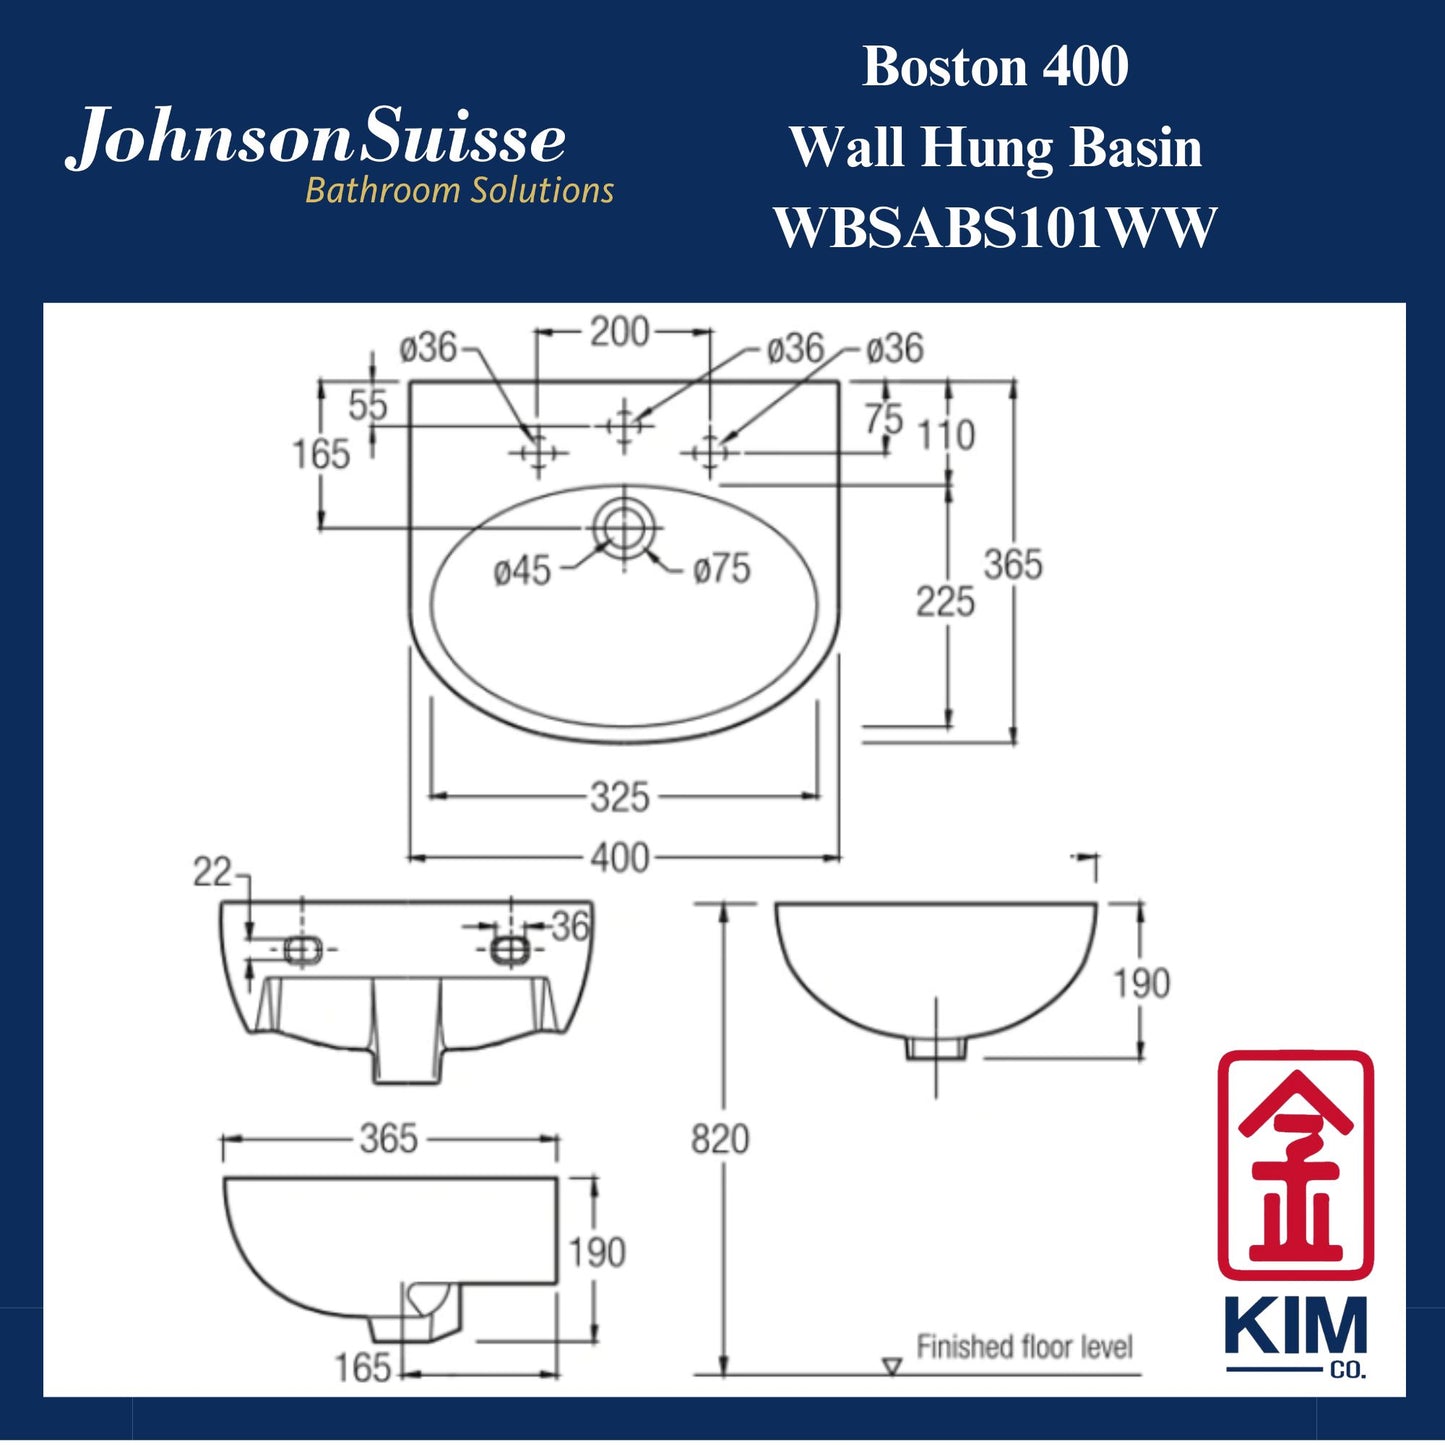 Johnson Suisse Boston 400 Wall Hung Basin (WBSABS101WW)